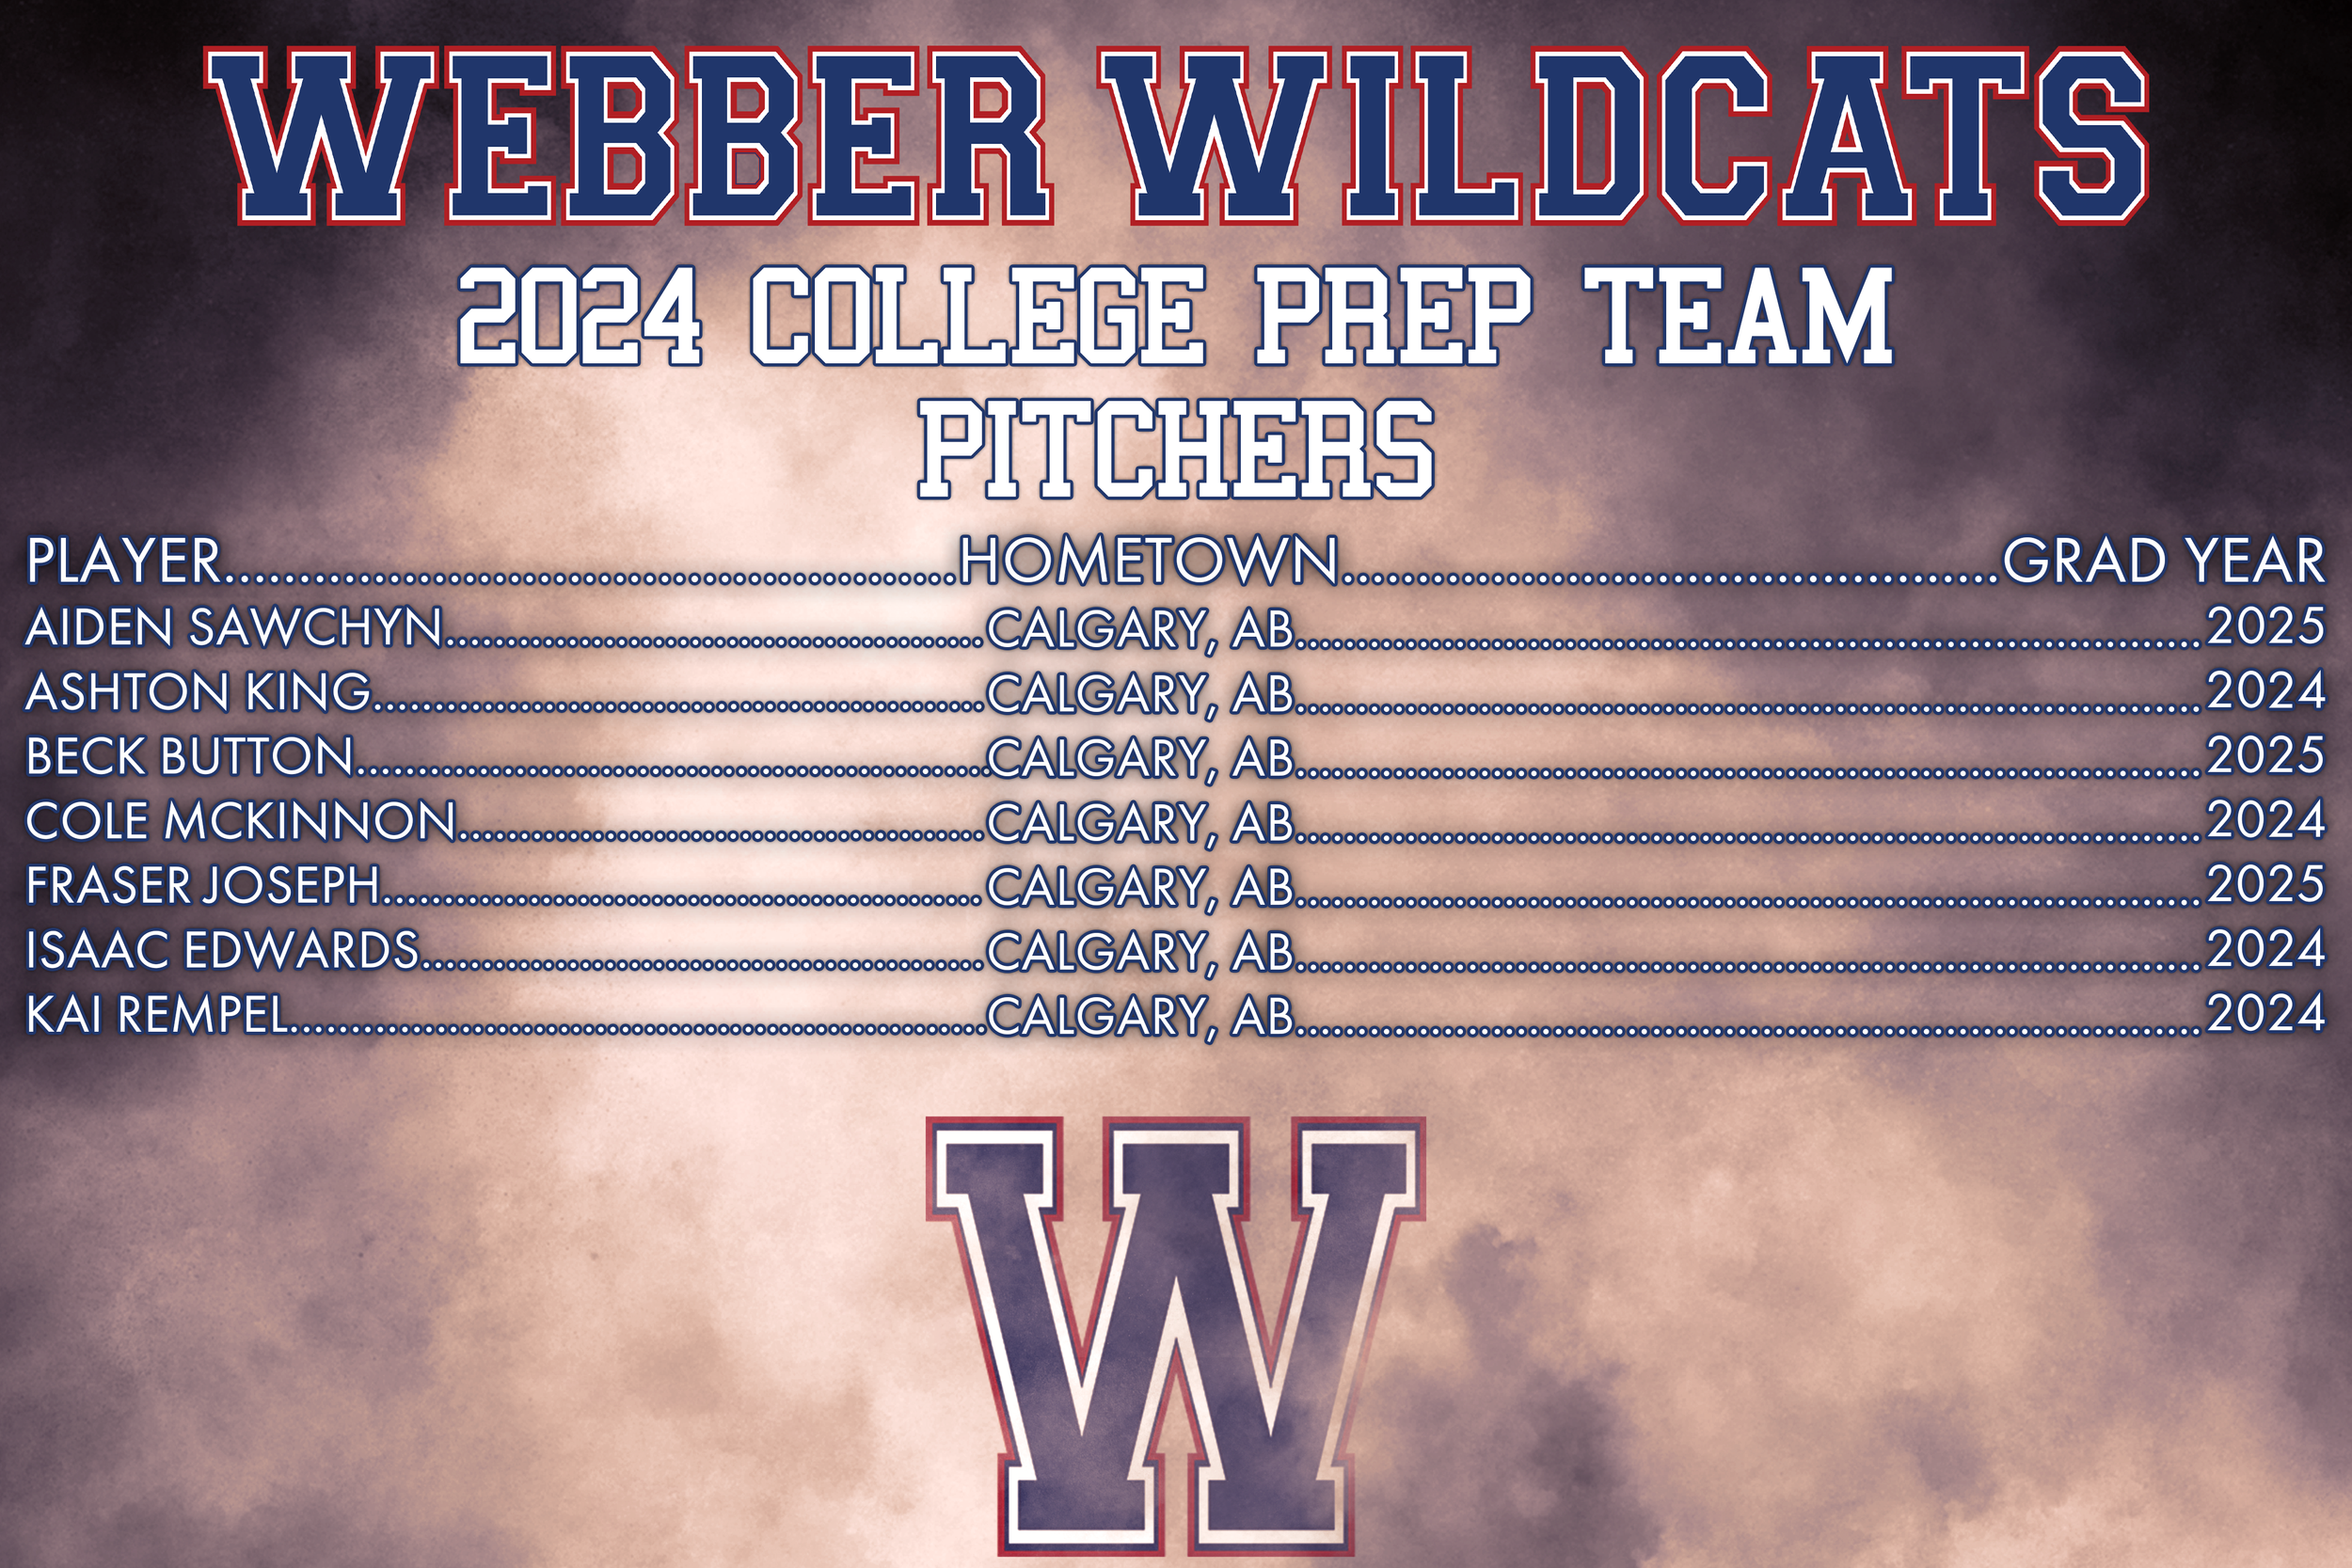 Webber Wildcats Prep Pitchers 2.png